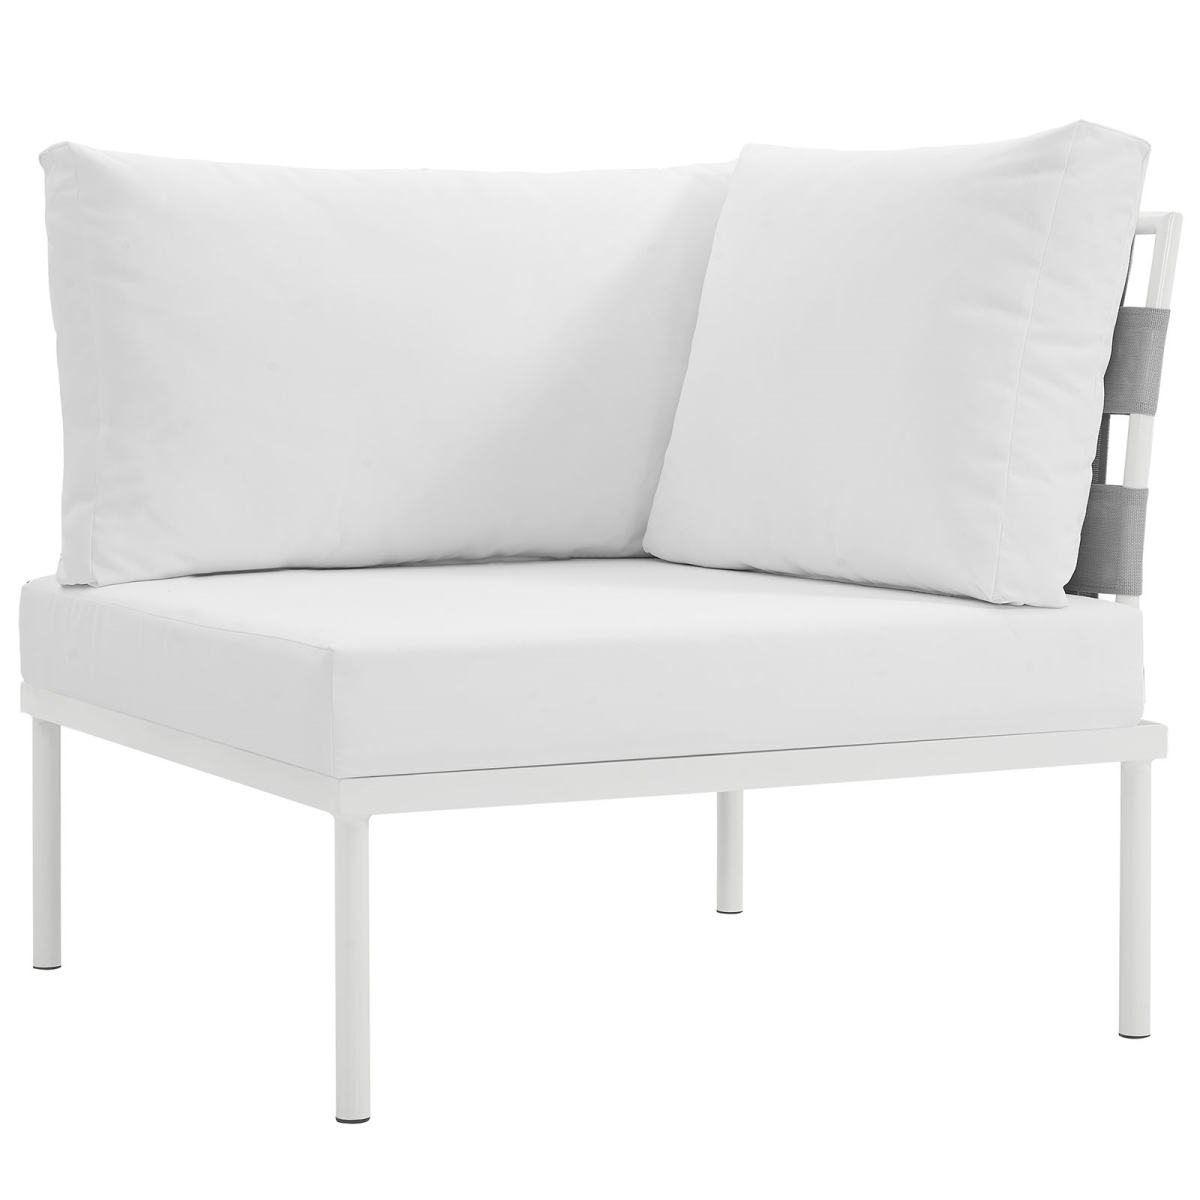 Eei-2601-whi-whi 32 X 33 In. Harmony Outdoor Patio Aluminum Corner Sofa - White & White